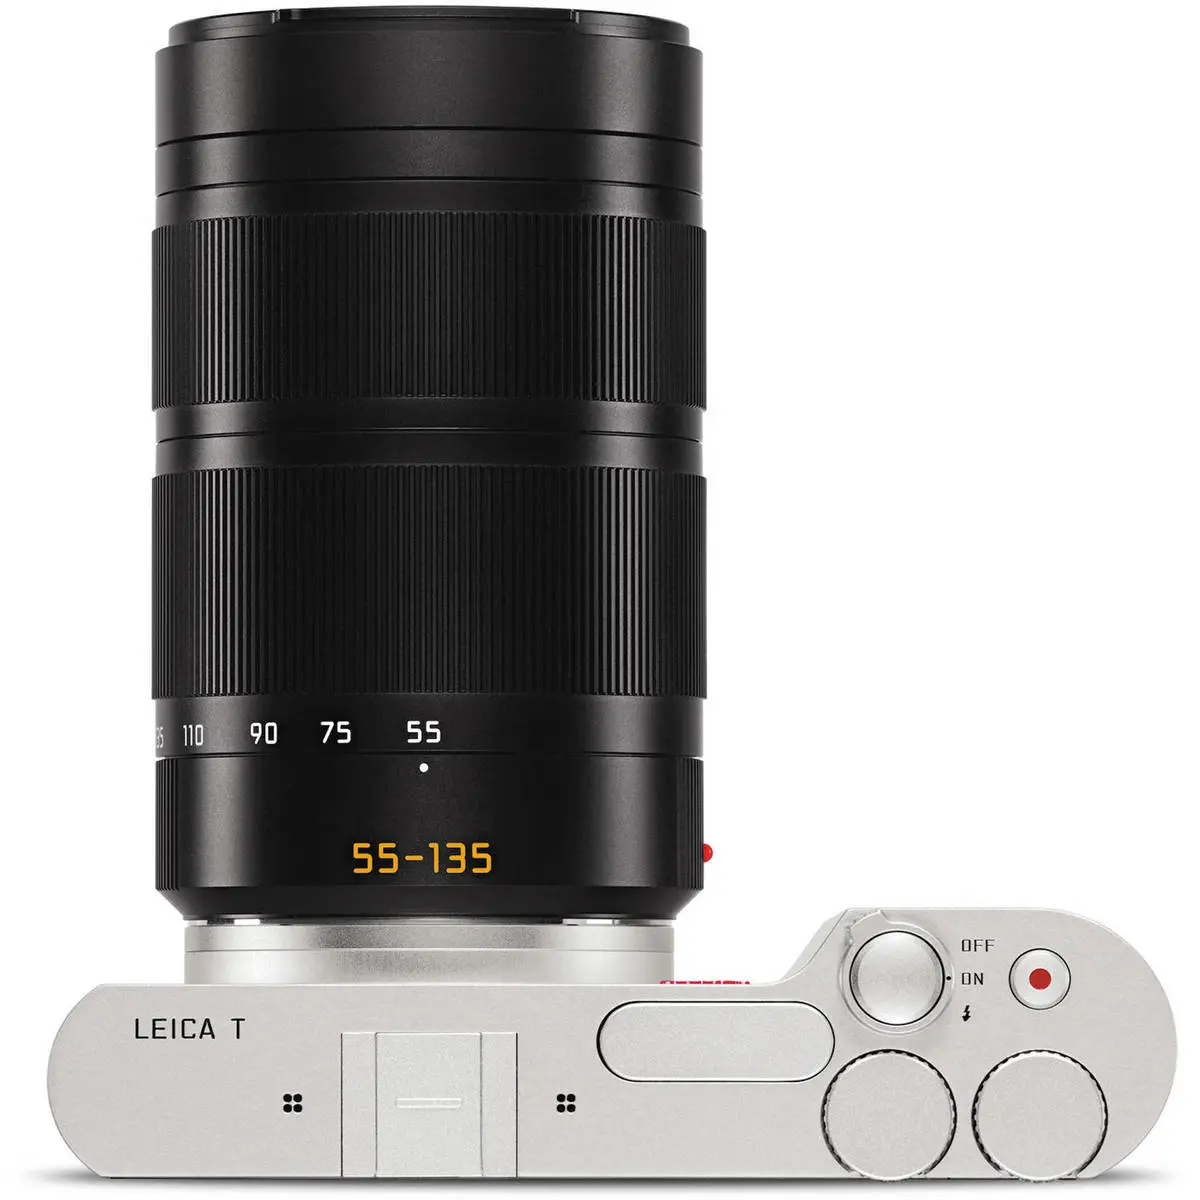 4. LEICA T APO Vario-Elmar 55-135MM f/3.5-4.5 ASPH Lens